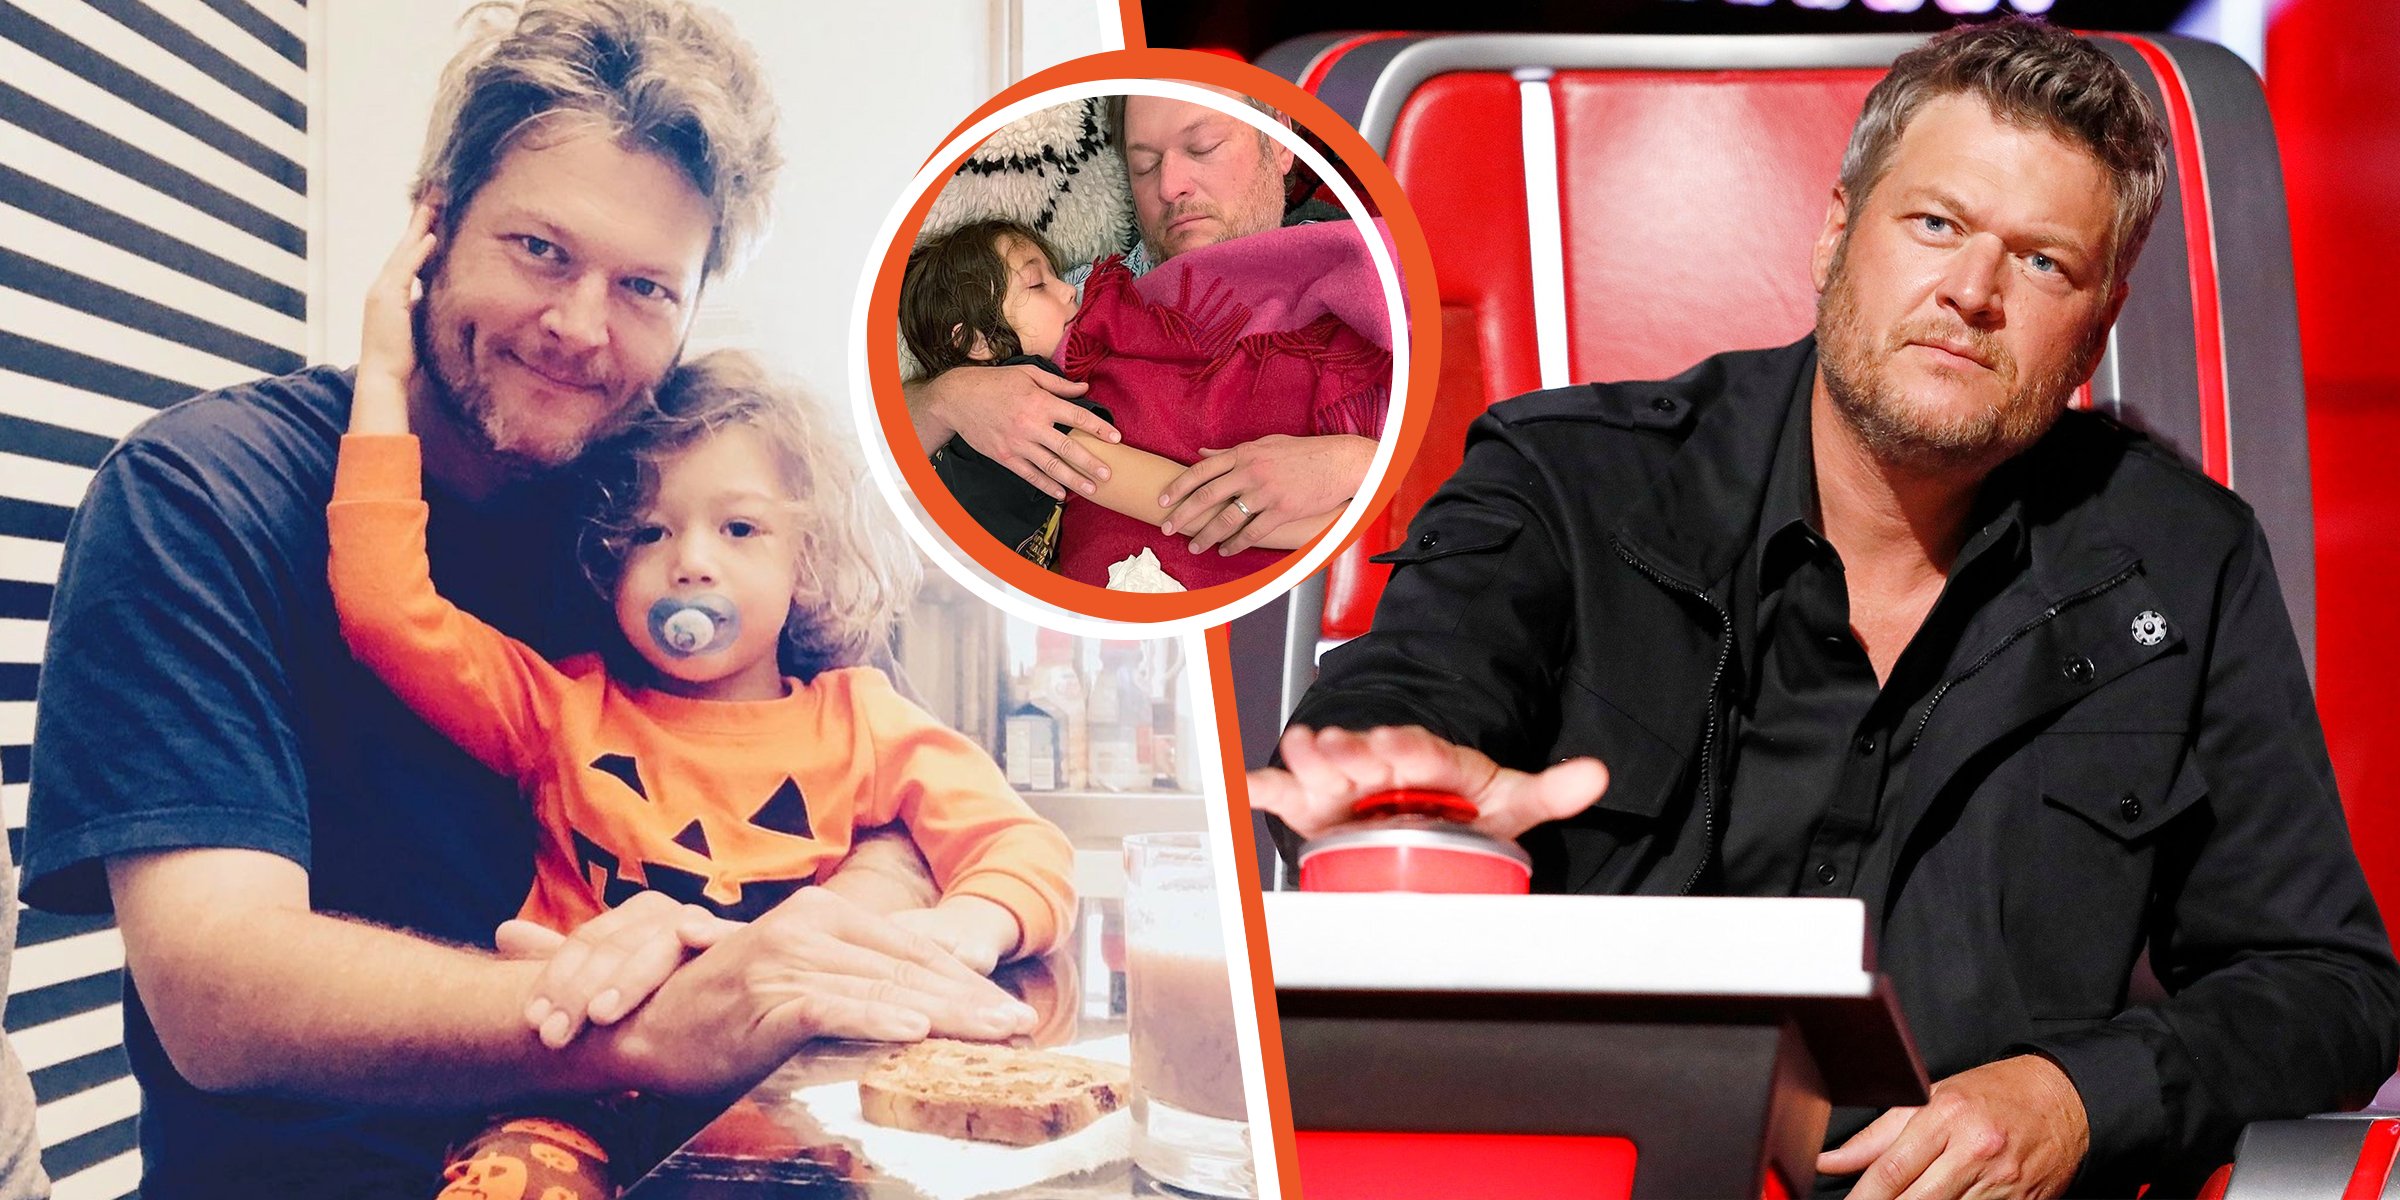 Blake Shelton with Gwen Stefani's son | Blake Shelton with Gwen Stefani's son | Black Shelton on "The Voice" | Souce: instagram.com/gwenstefani  | Getty Images 